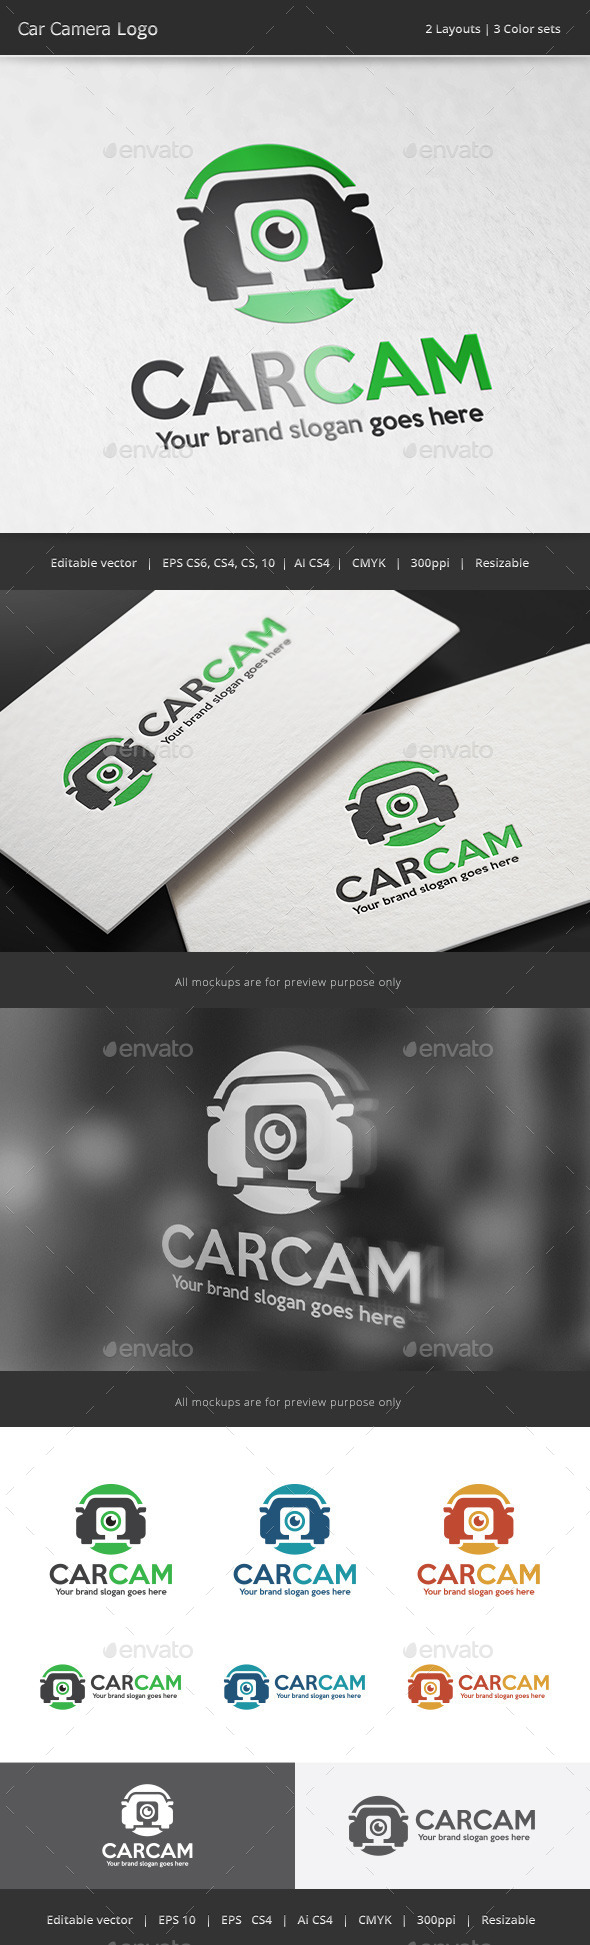 Car Camera Logo